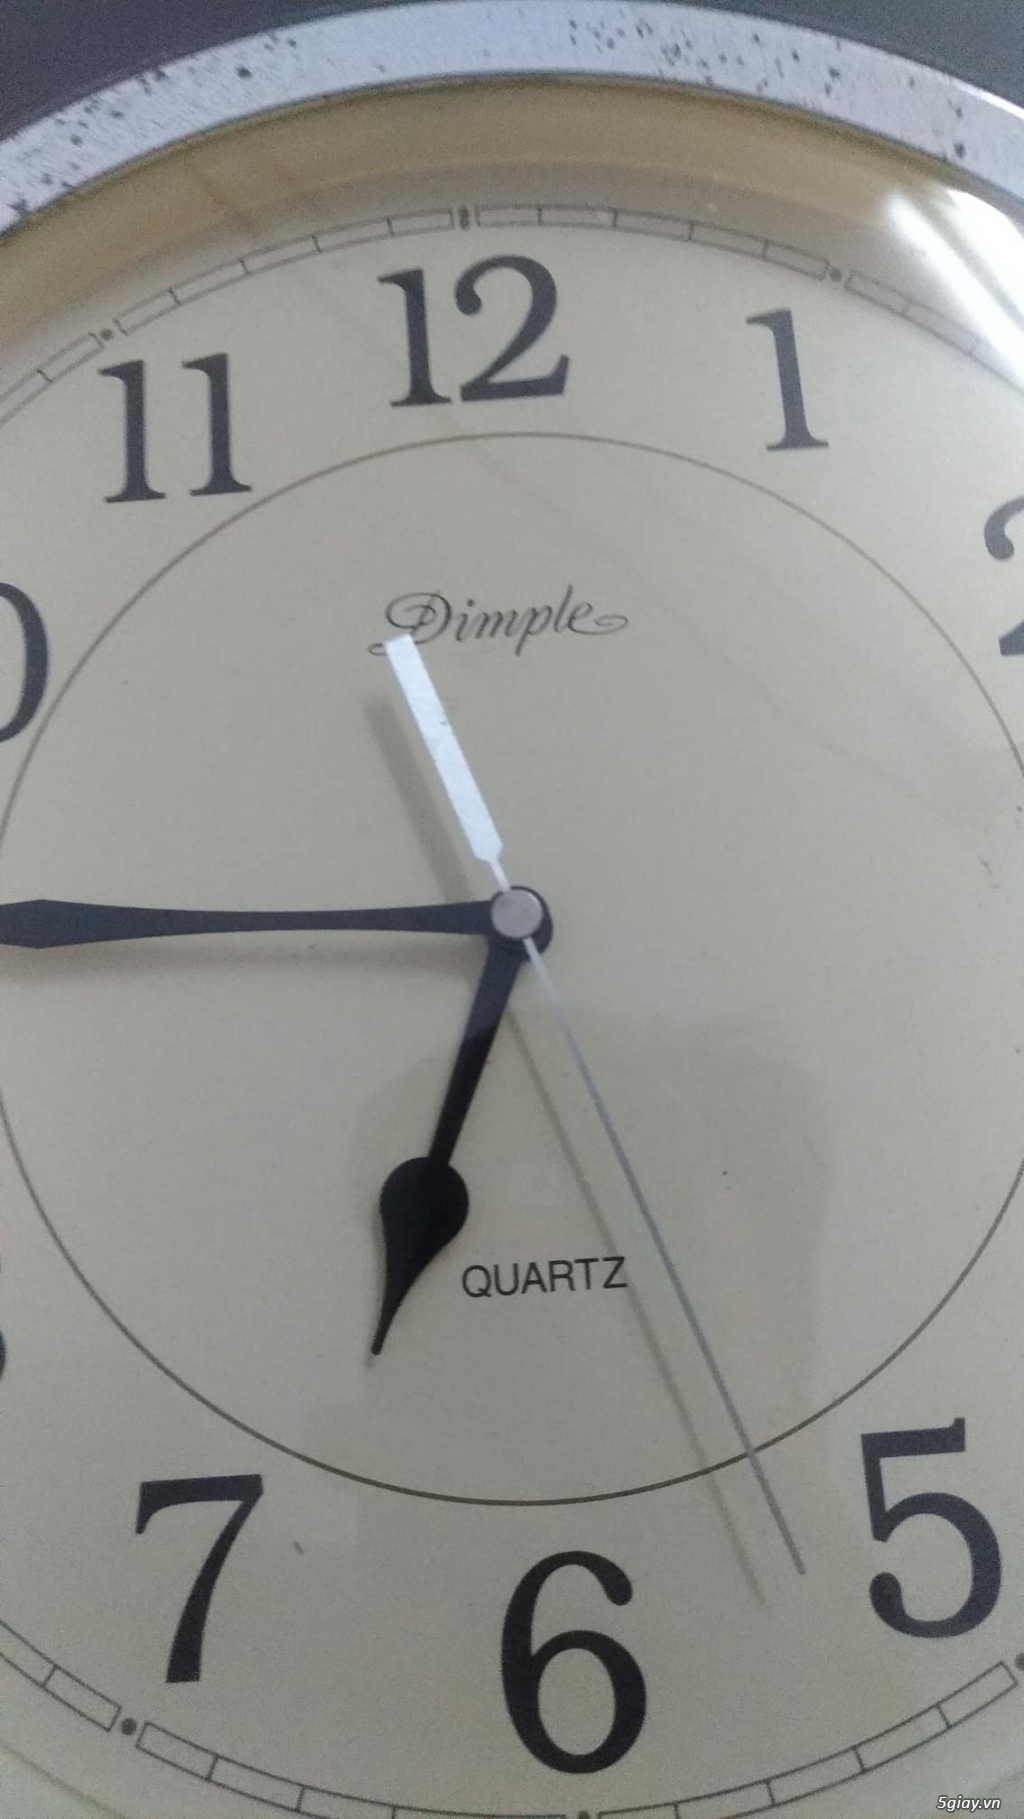 Đồng hồ treo tường Dimple giá 100k - 2